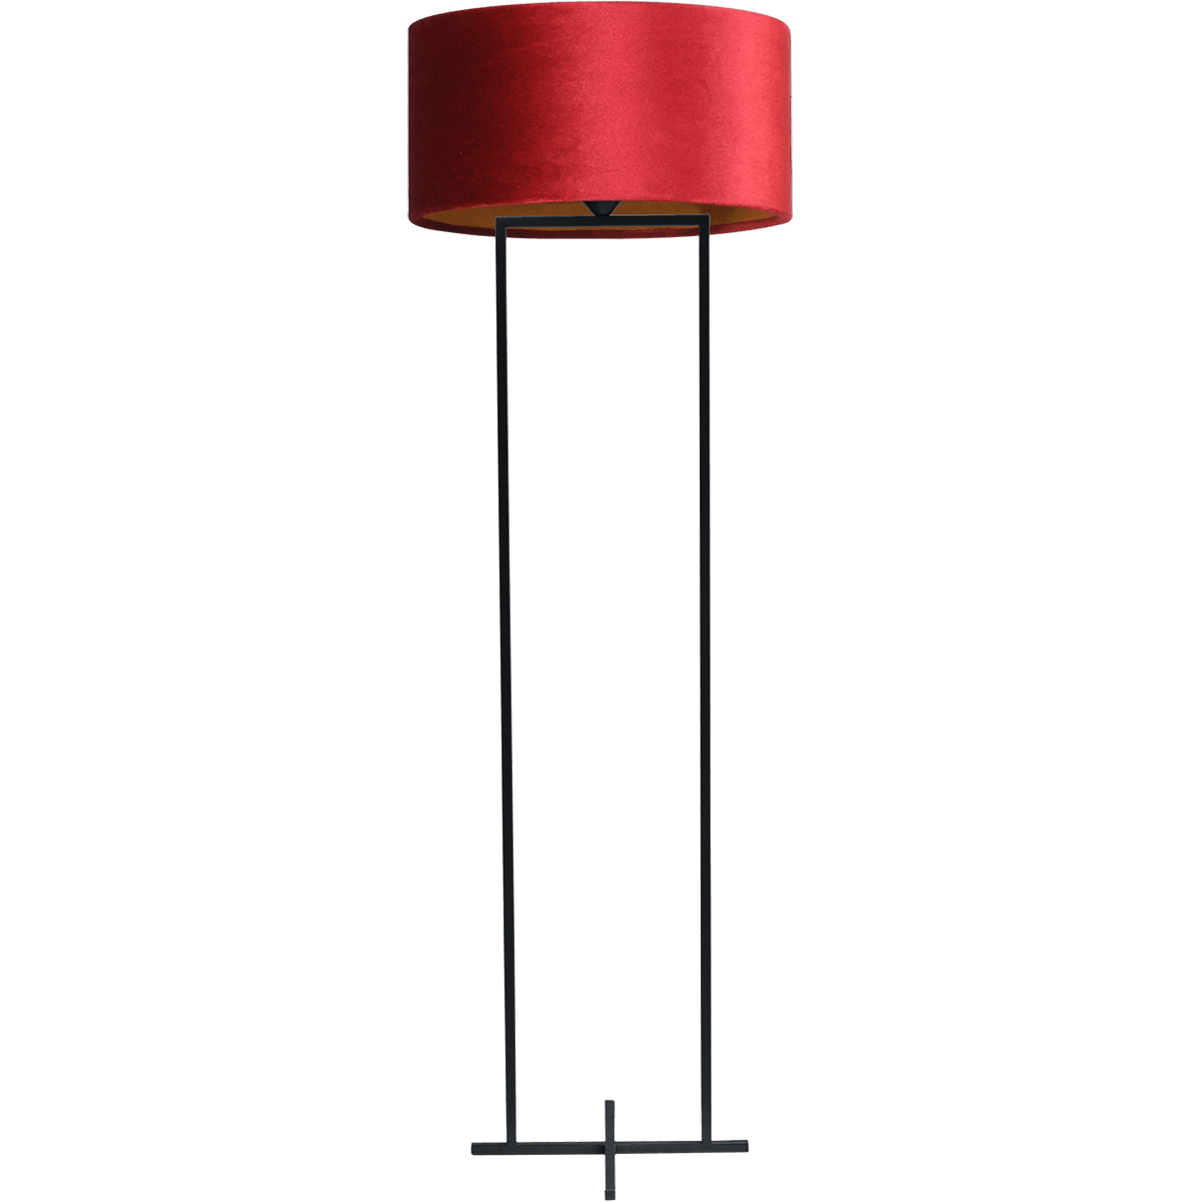 Vloerlamp Cross Rectangle zwart structuur hoogte 158cm inclusief rode lampenkap Artik red 52/52/25 - MASTERLIGHT